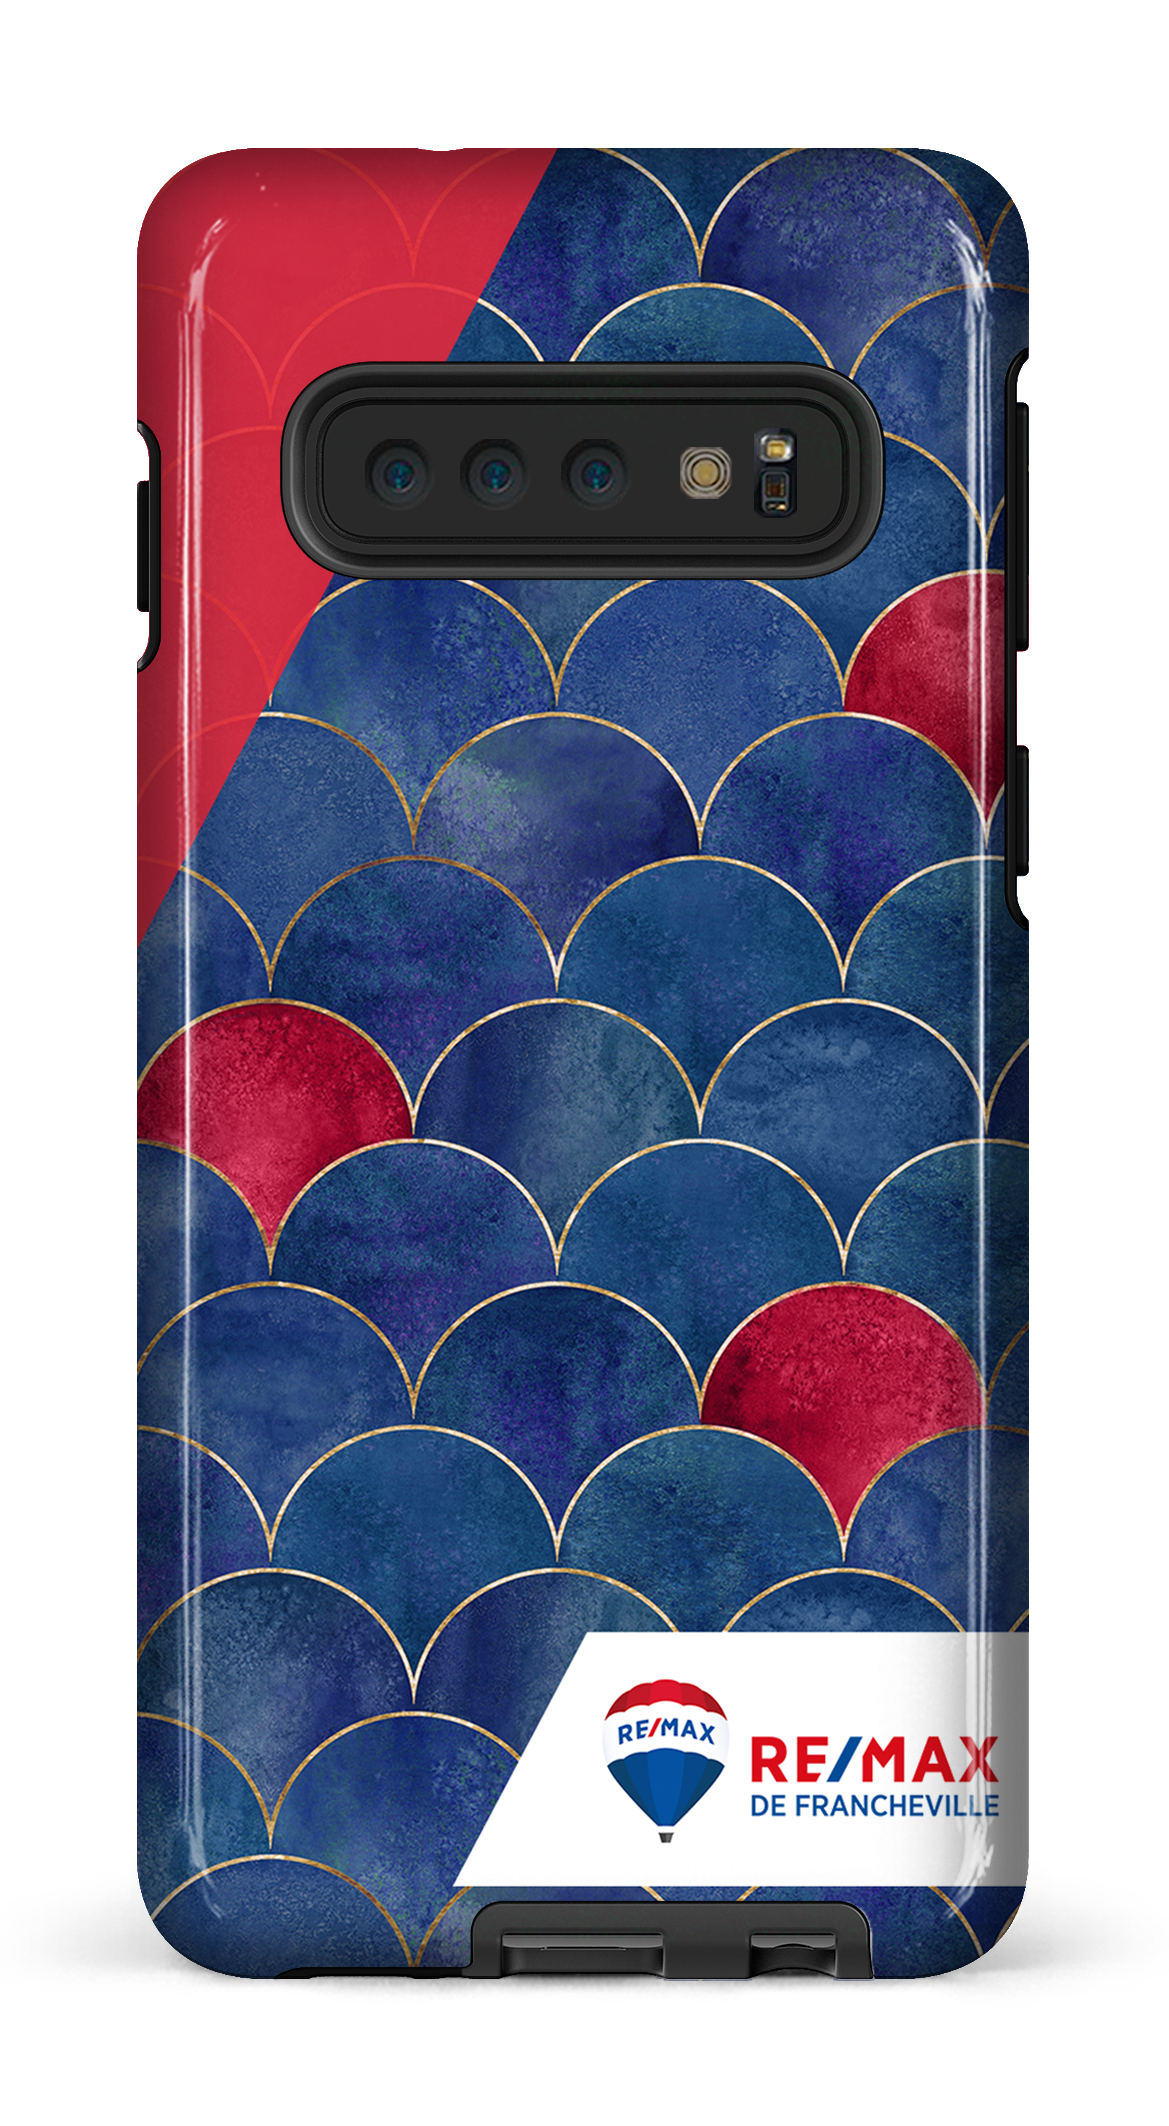 Écailles bicolores de Francheville - Galaxy S10